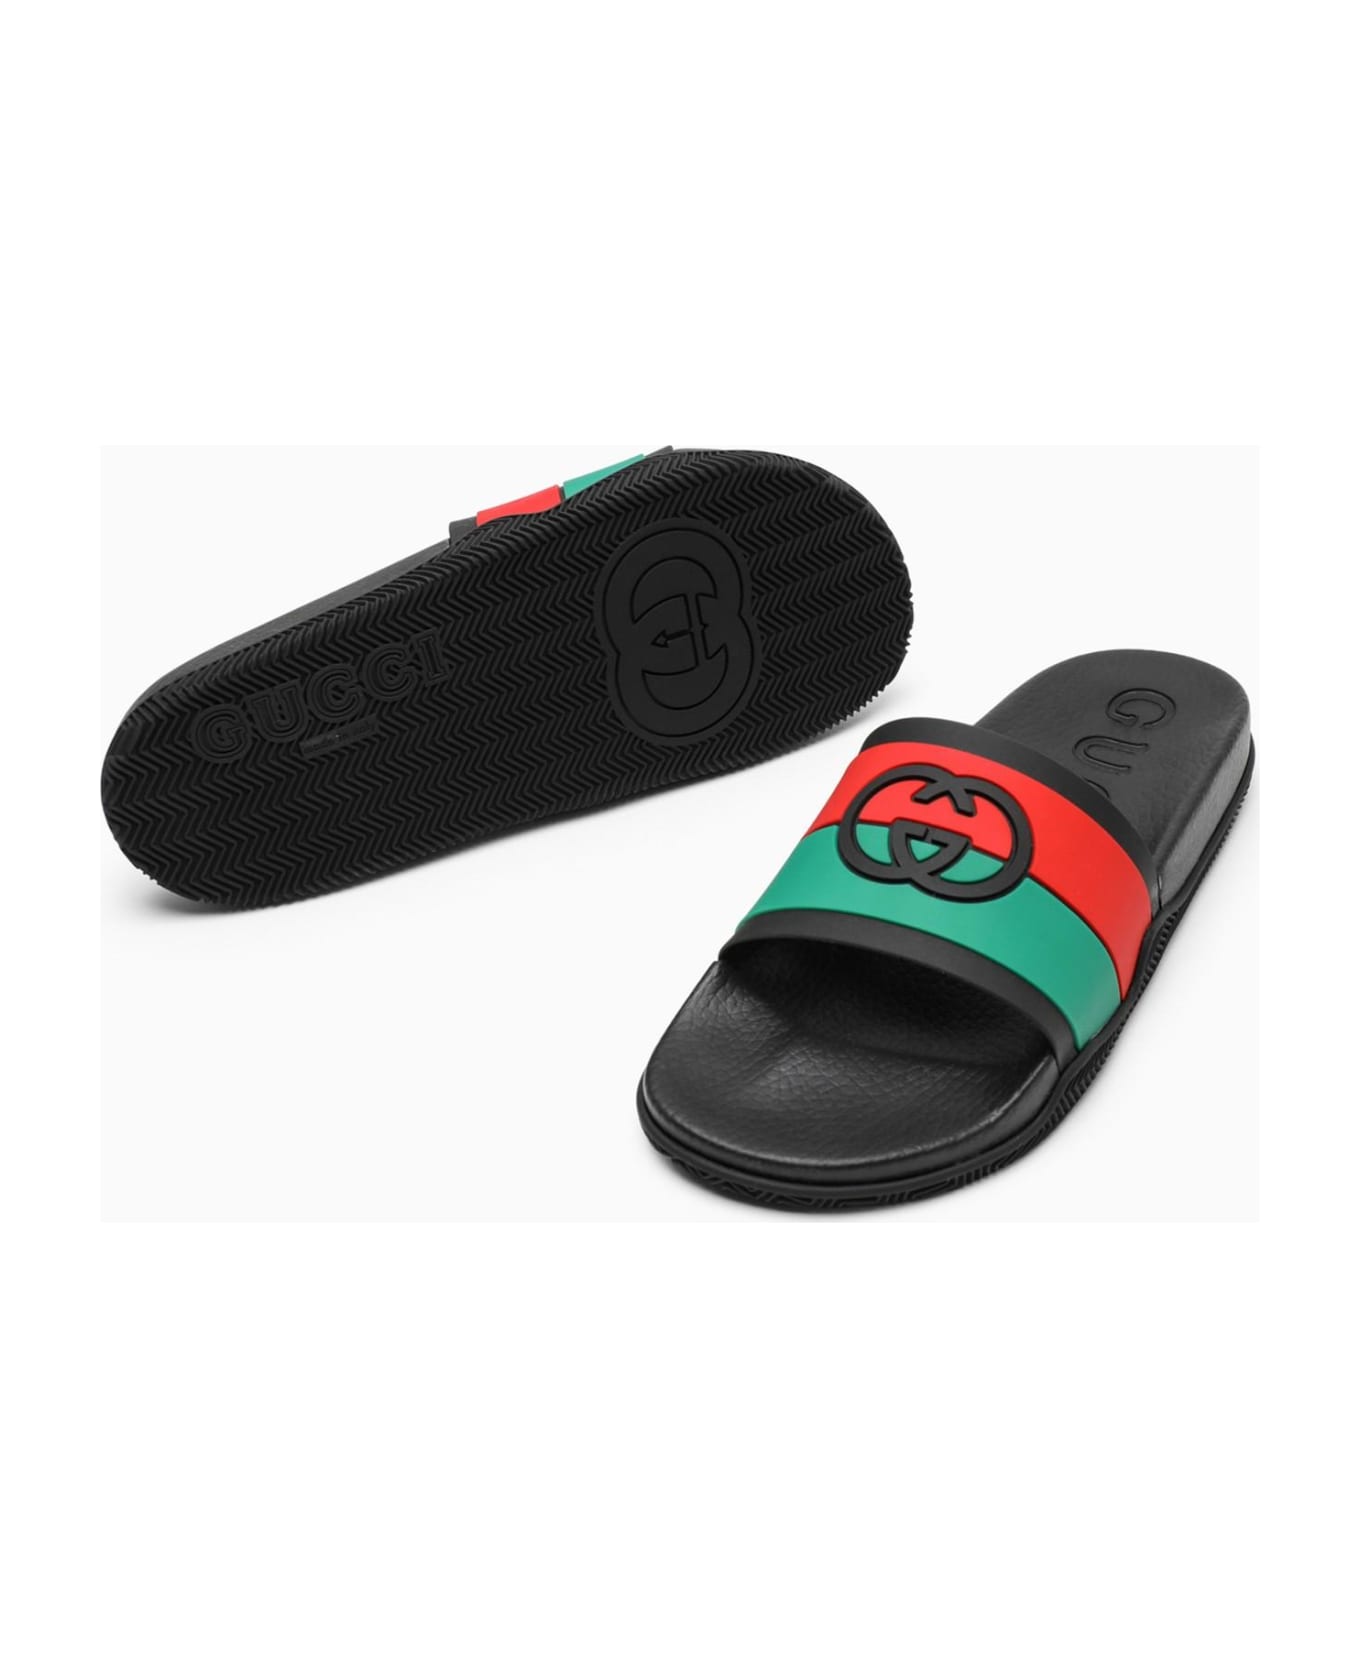 Gucci Multicolour Slider Sandals - Black その他各種シューズ